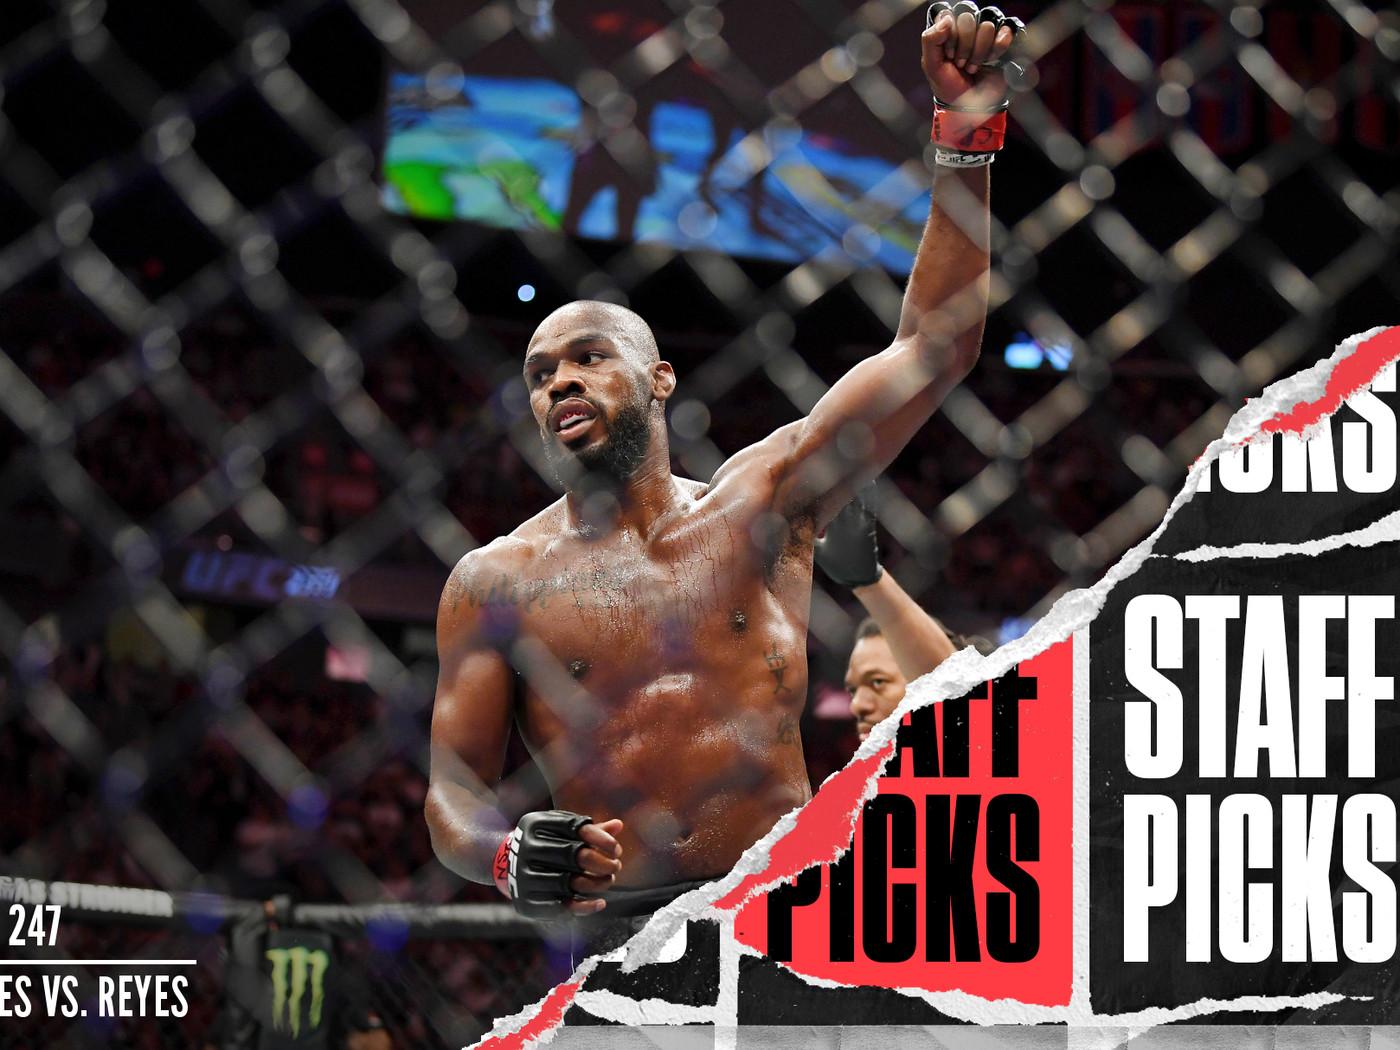 UFC 247: Jon Jones vs. Dominick Reyes staff picks and predictions